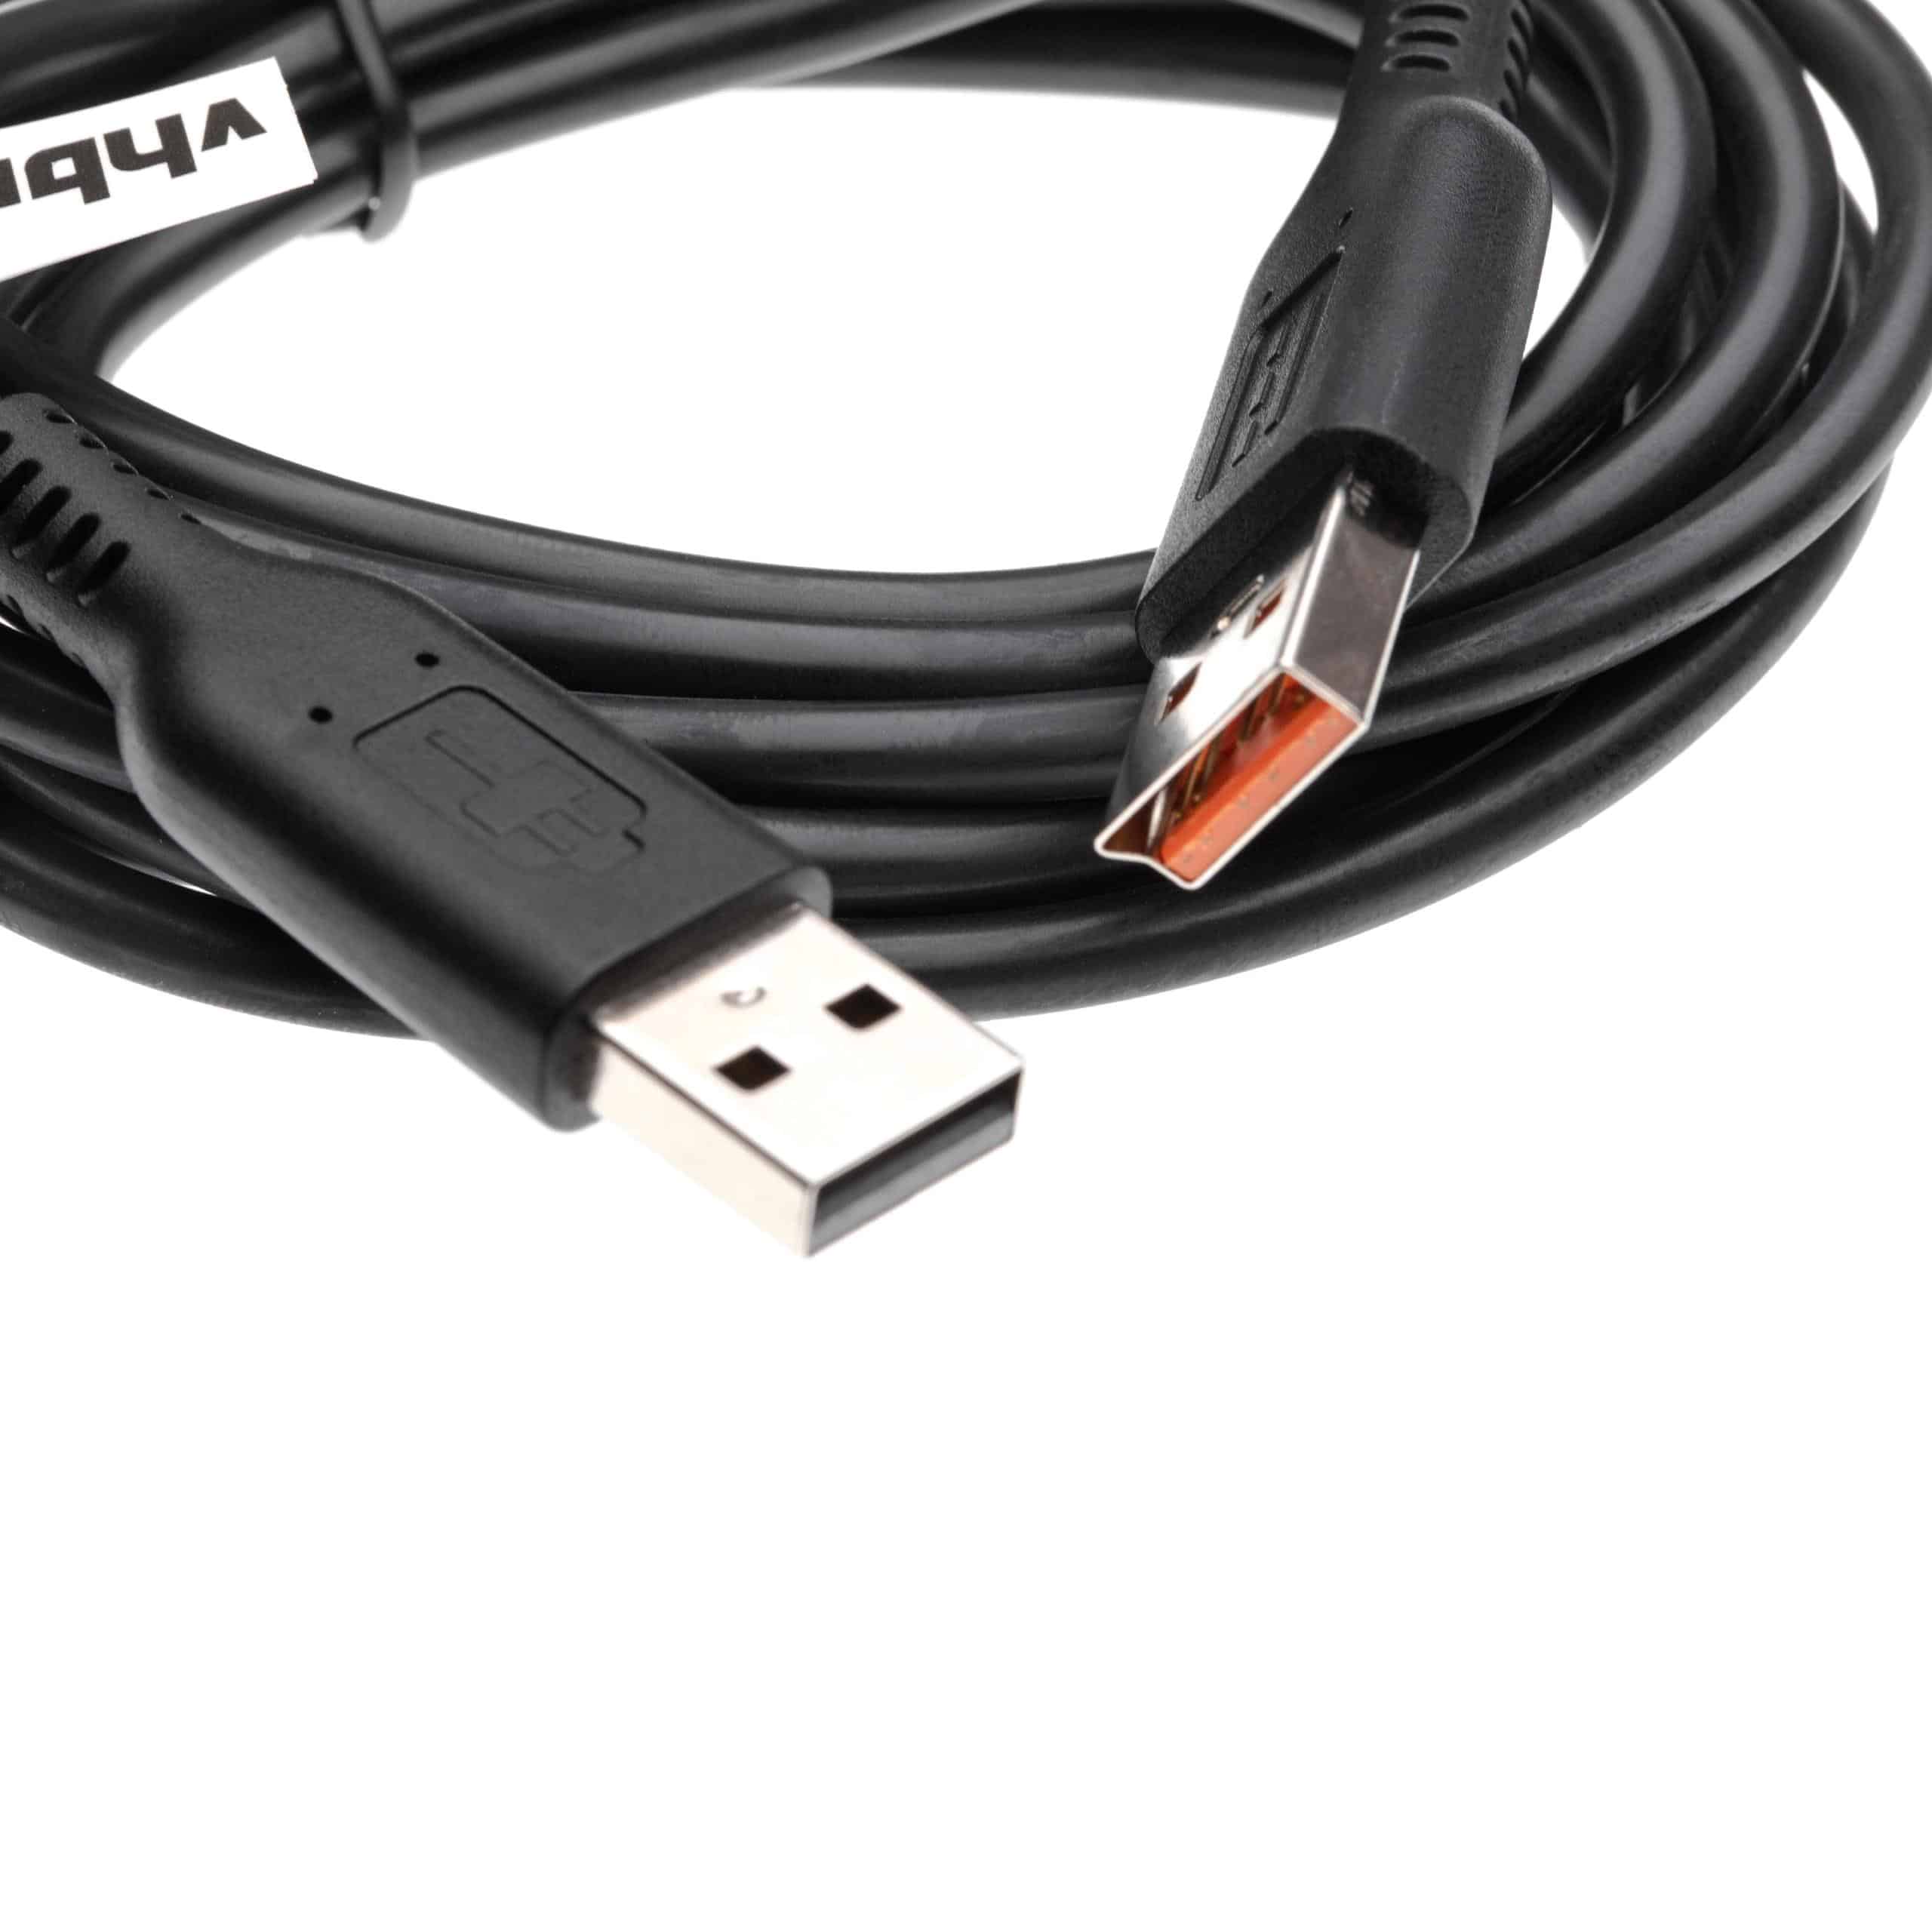 USB Datenkabel als Ersatz für Lenovo 5L60J33144, 5L60J33145 für Lenovo Tablet - 2in1 Ladekabel - 200cm